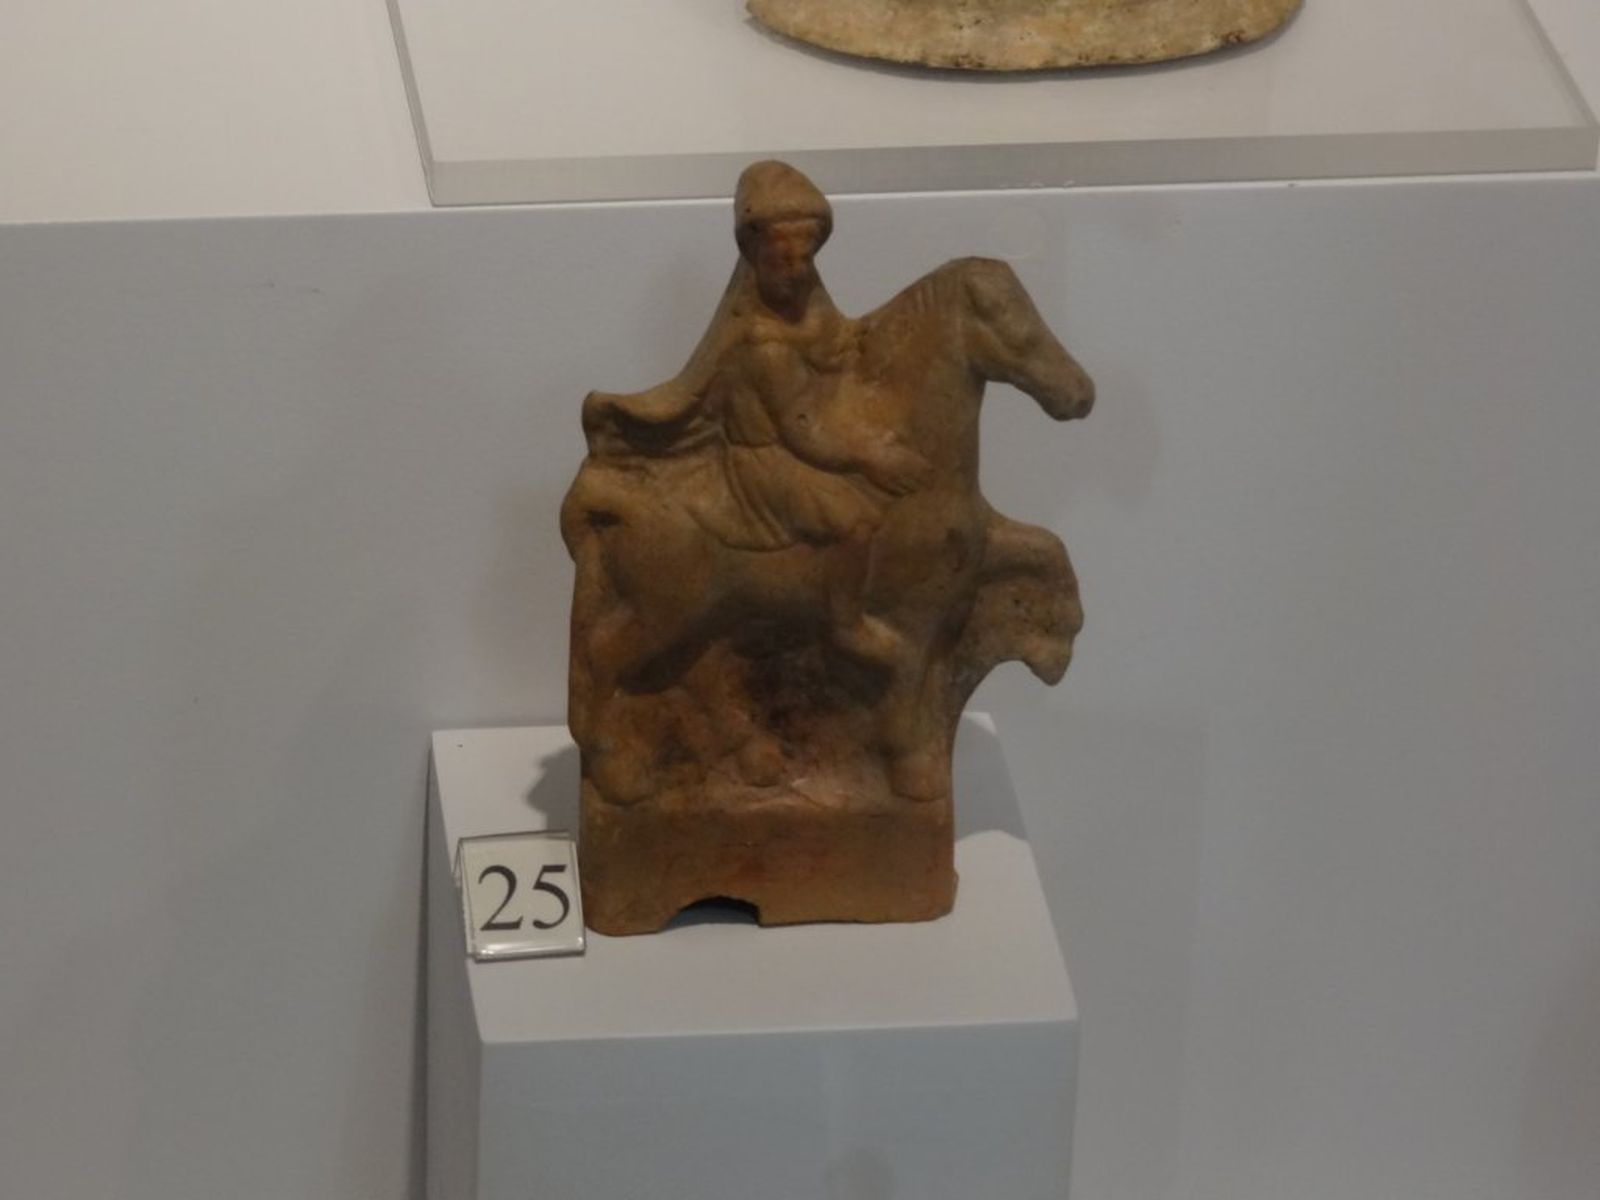 077 - Museo Archeologico di Fethiye